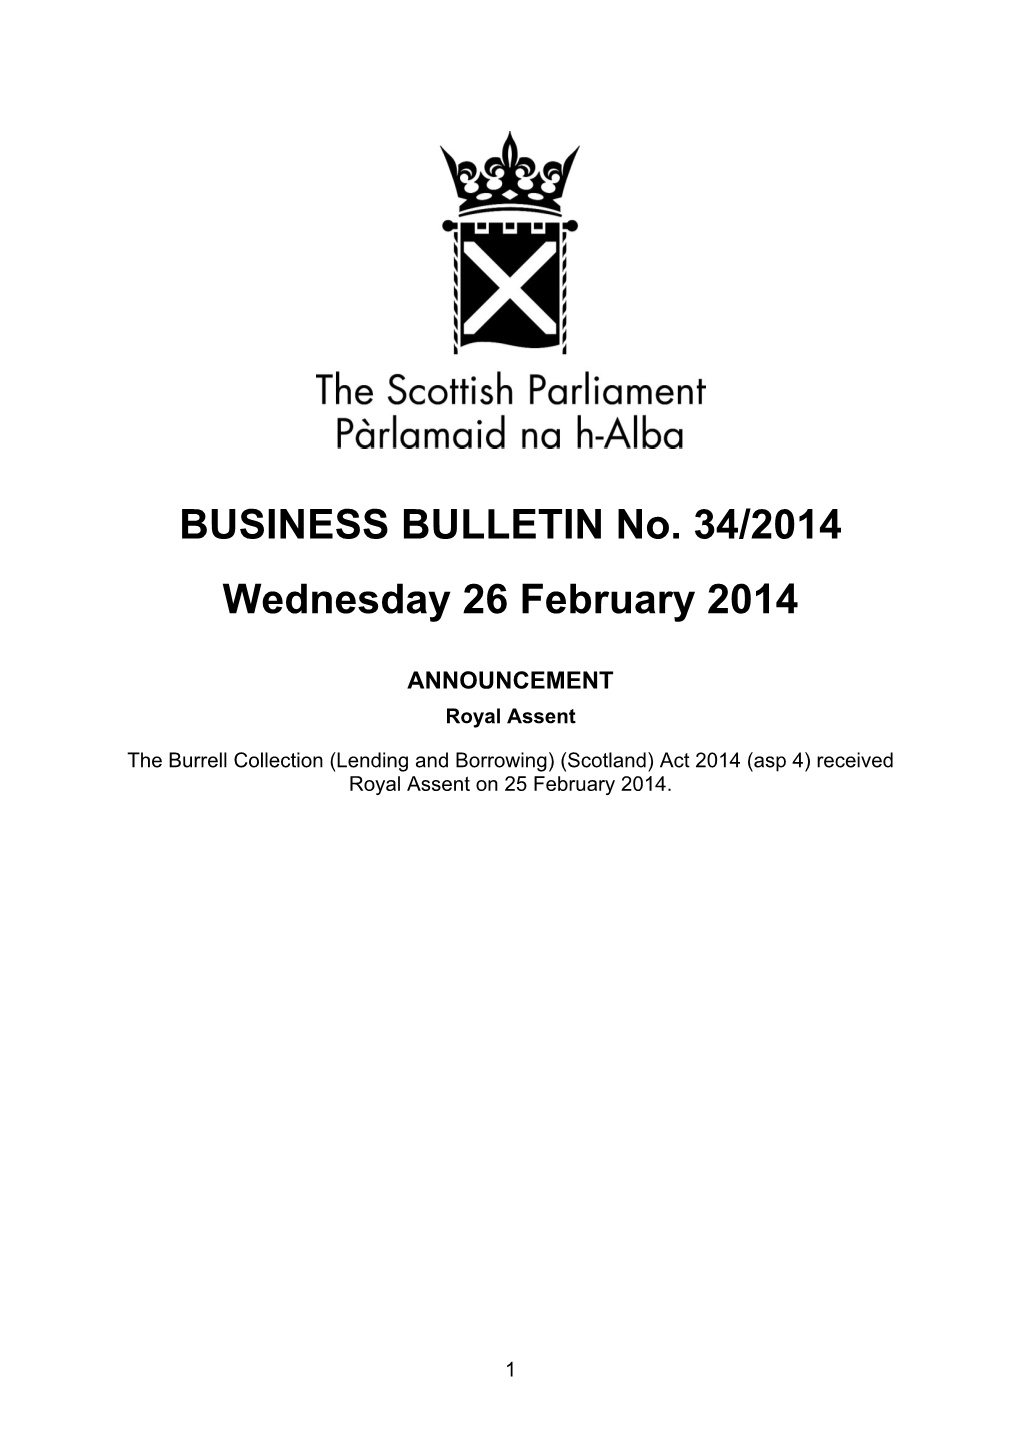 BUSINESS BULLETIN No. 34/2014 Wednesday 26 February 2014